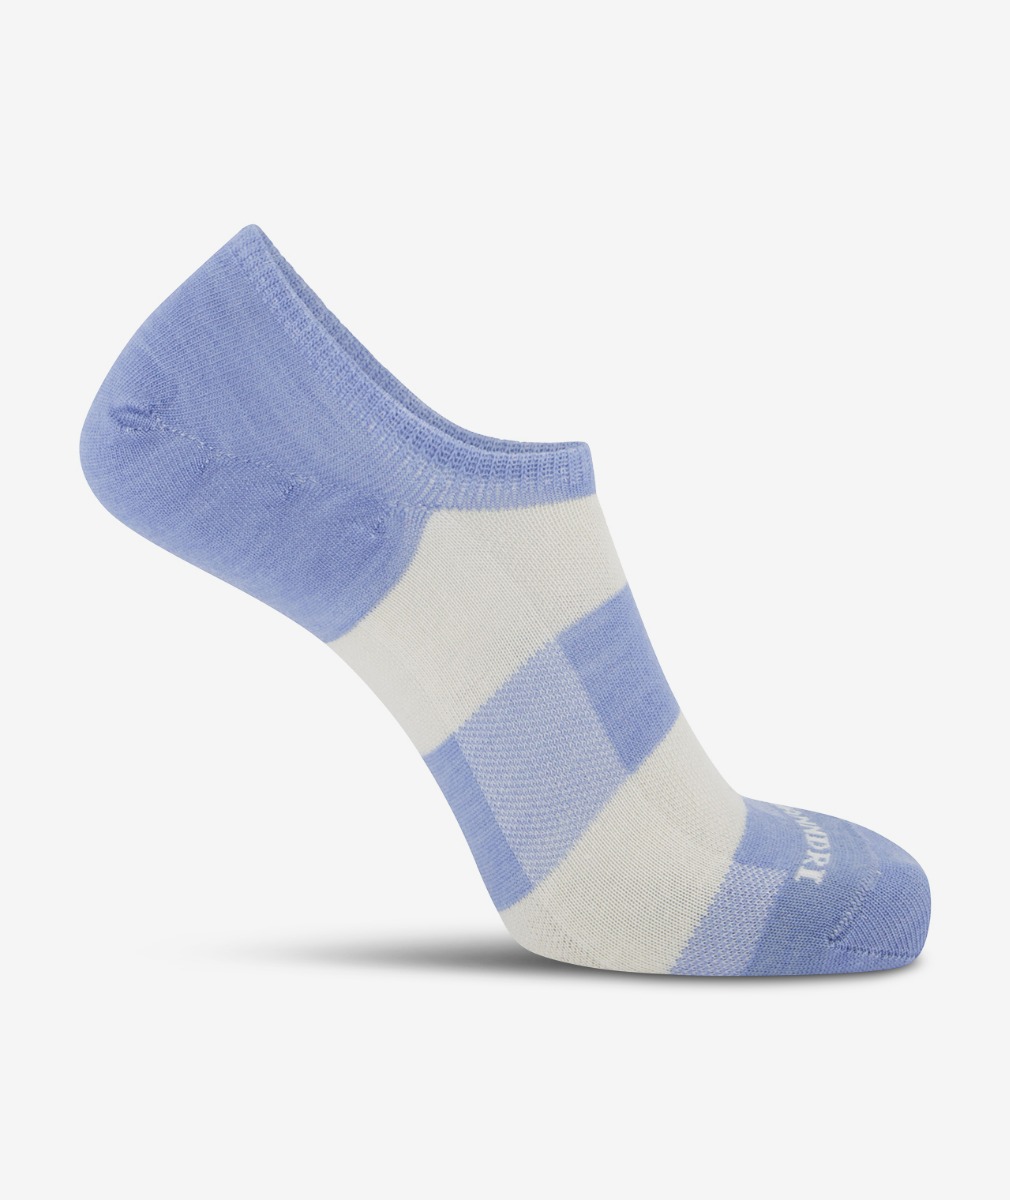 Knowler Merino Invisible Socks